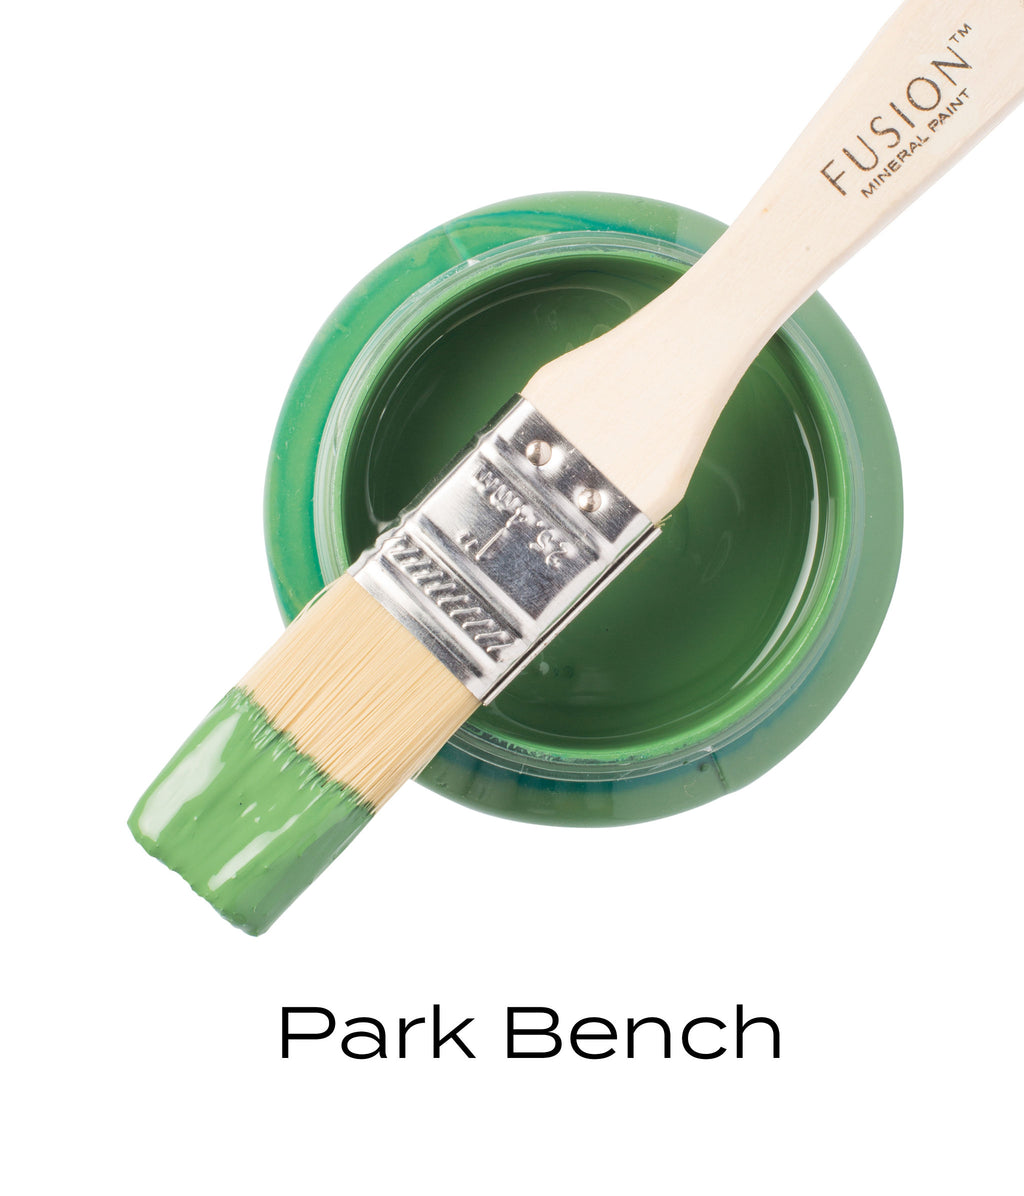 Park Bench Fusion Mineral Paint Near Me